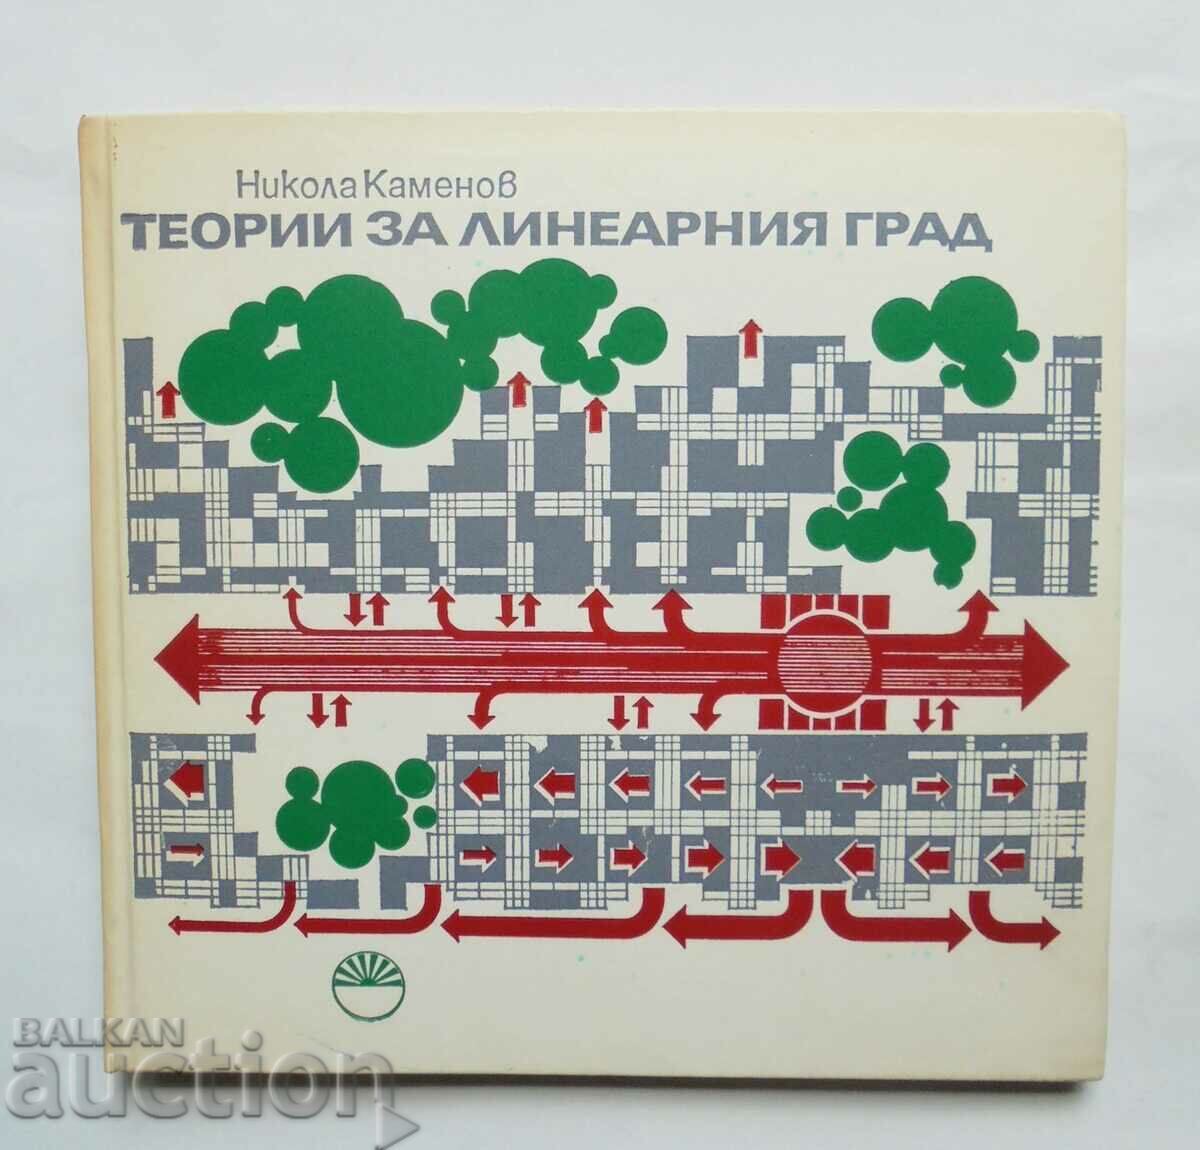 Theories for the Linear City - Nikola Kamenov 1983